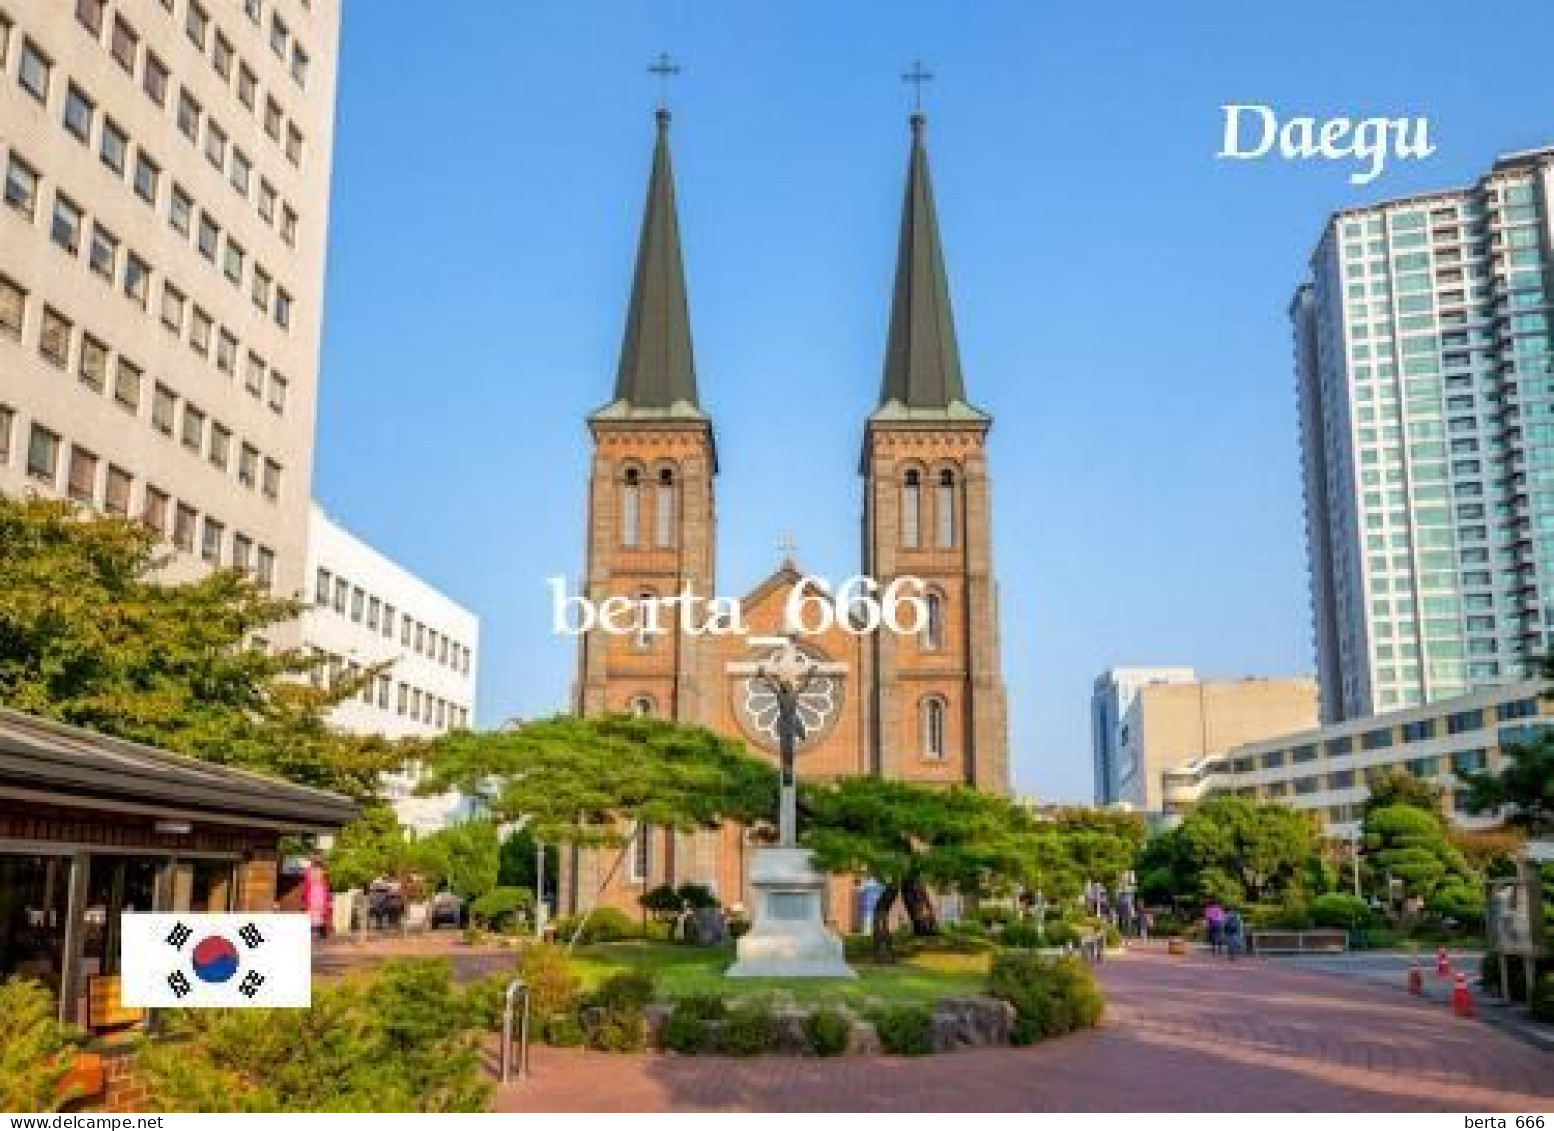 South Korea Daegu View Church New Postcard - Korea (Süd)